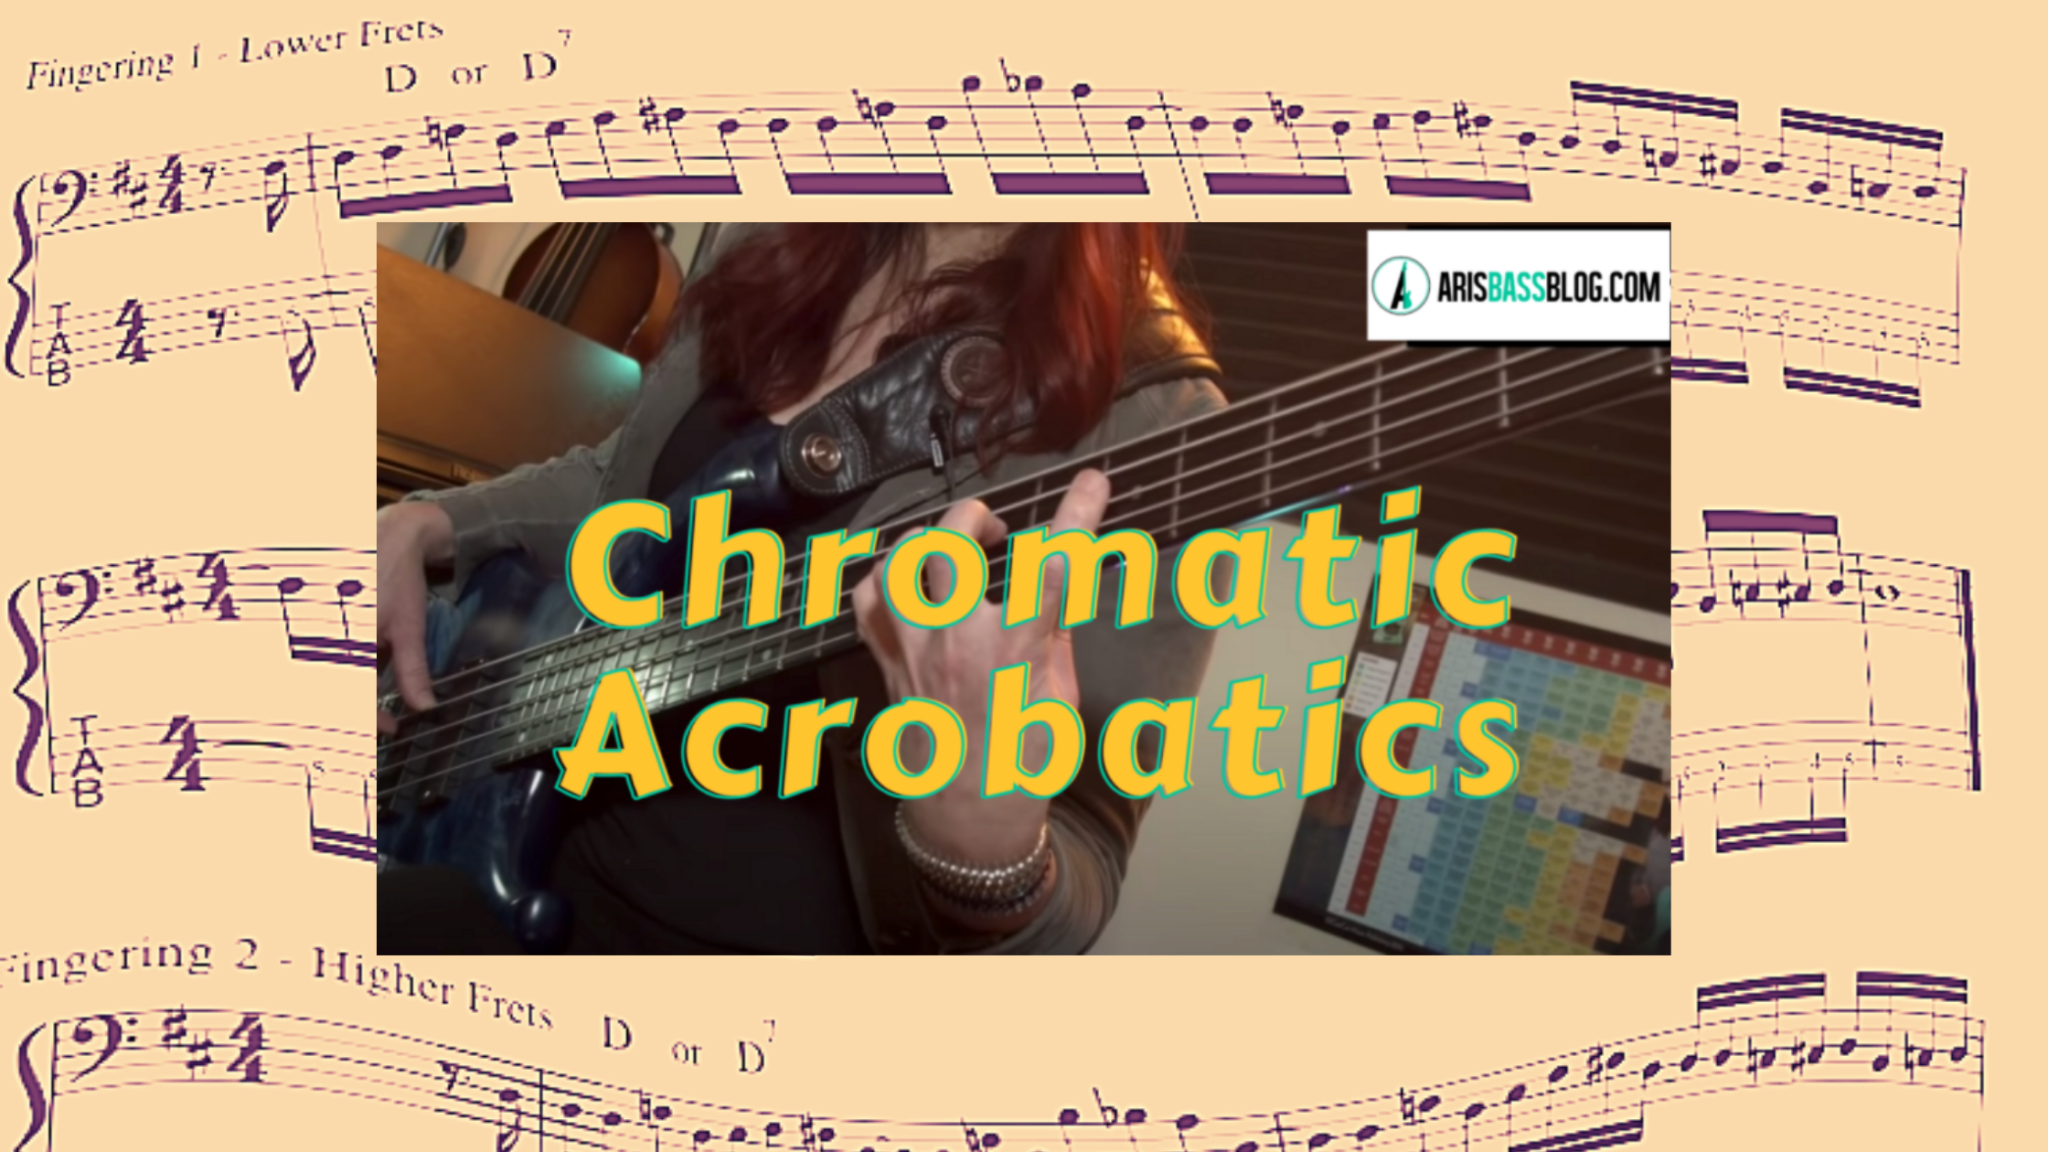 Chromatic acrobatics